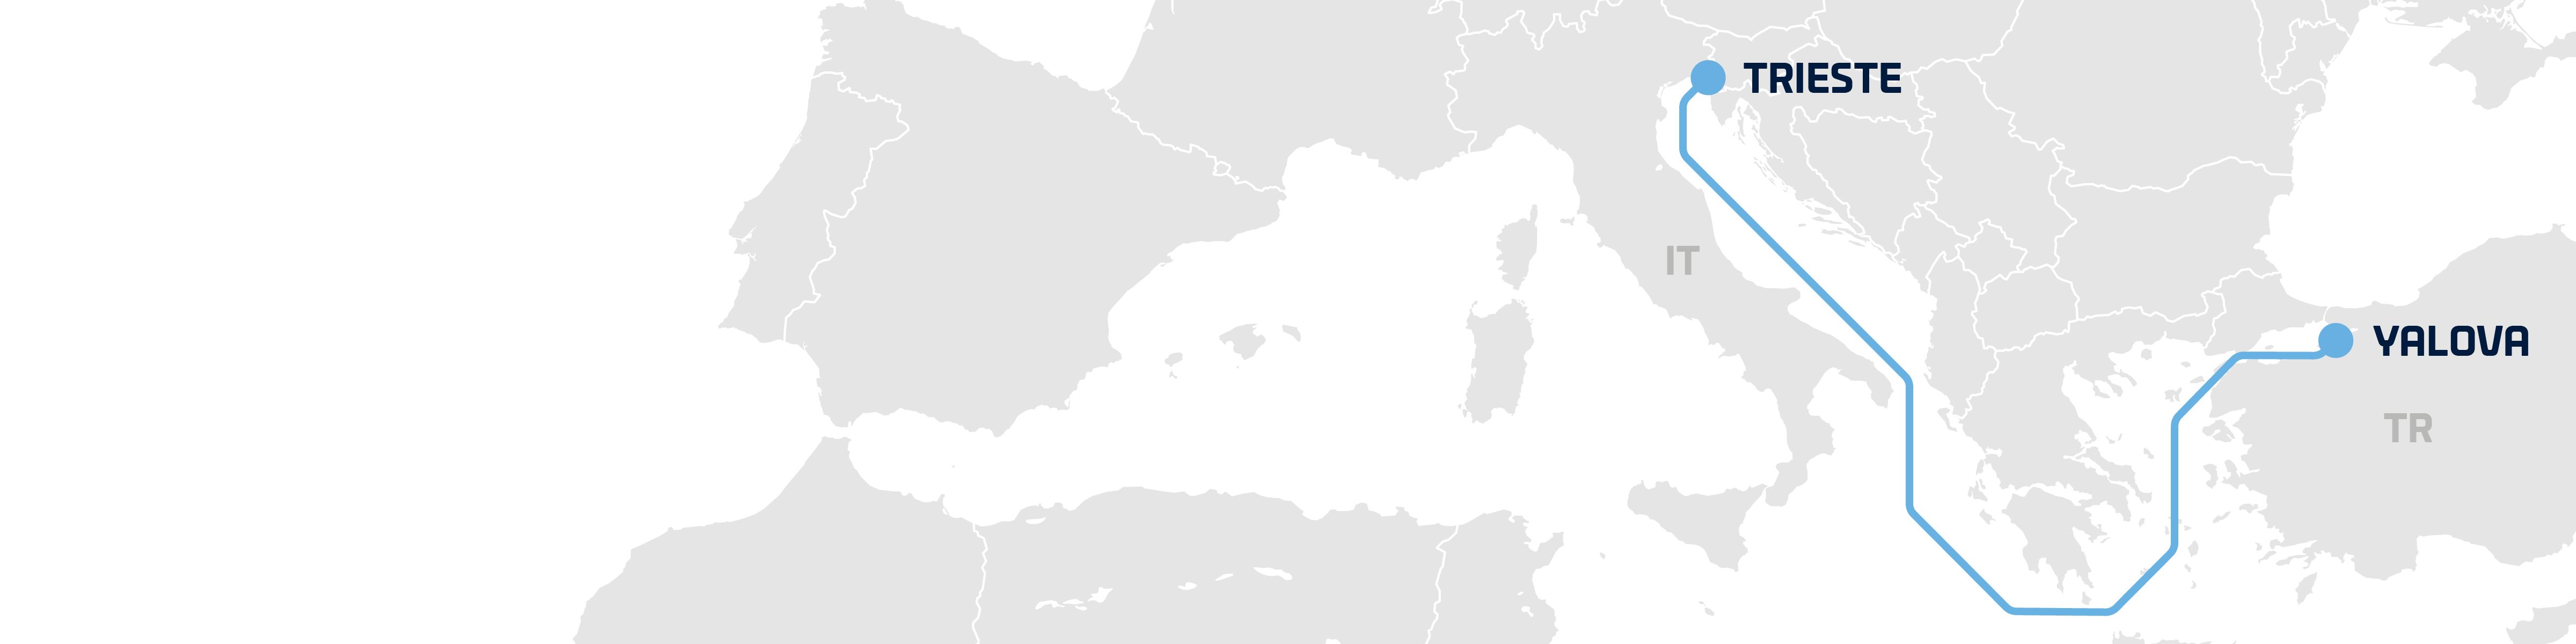 Yalova-Trieste header map